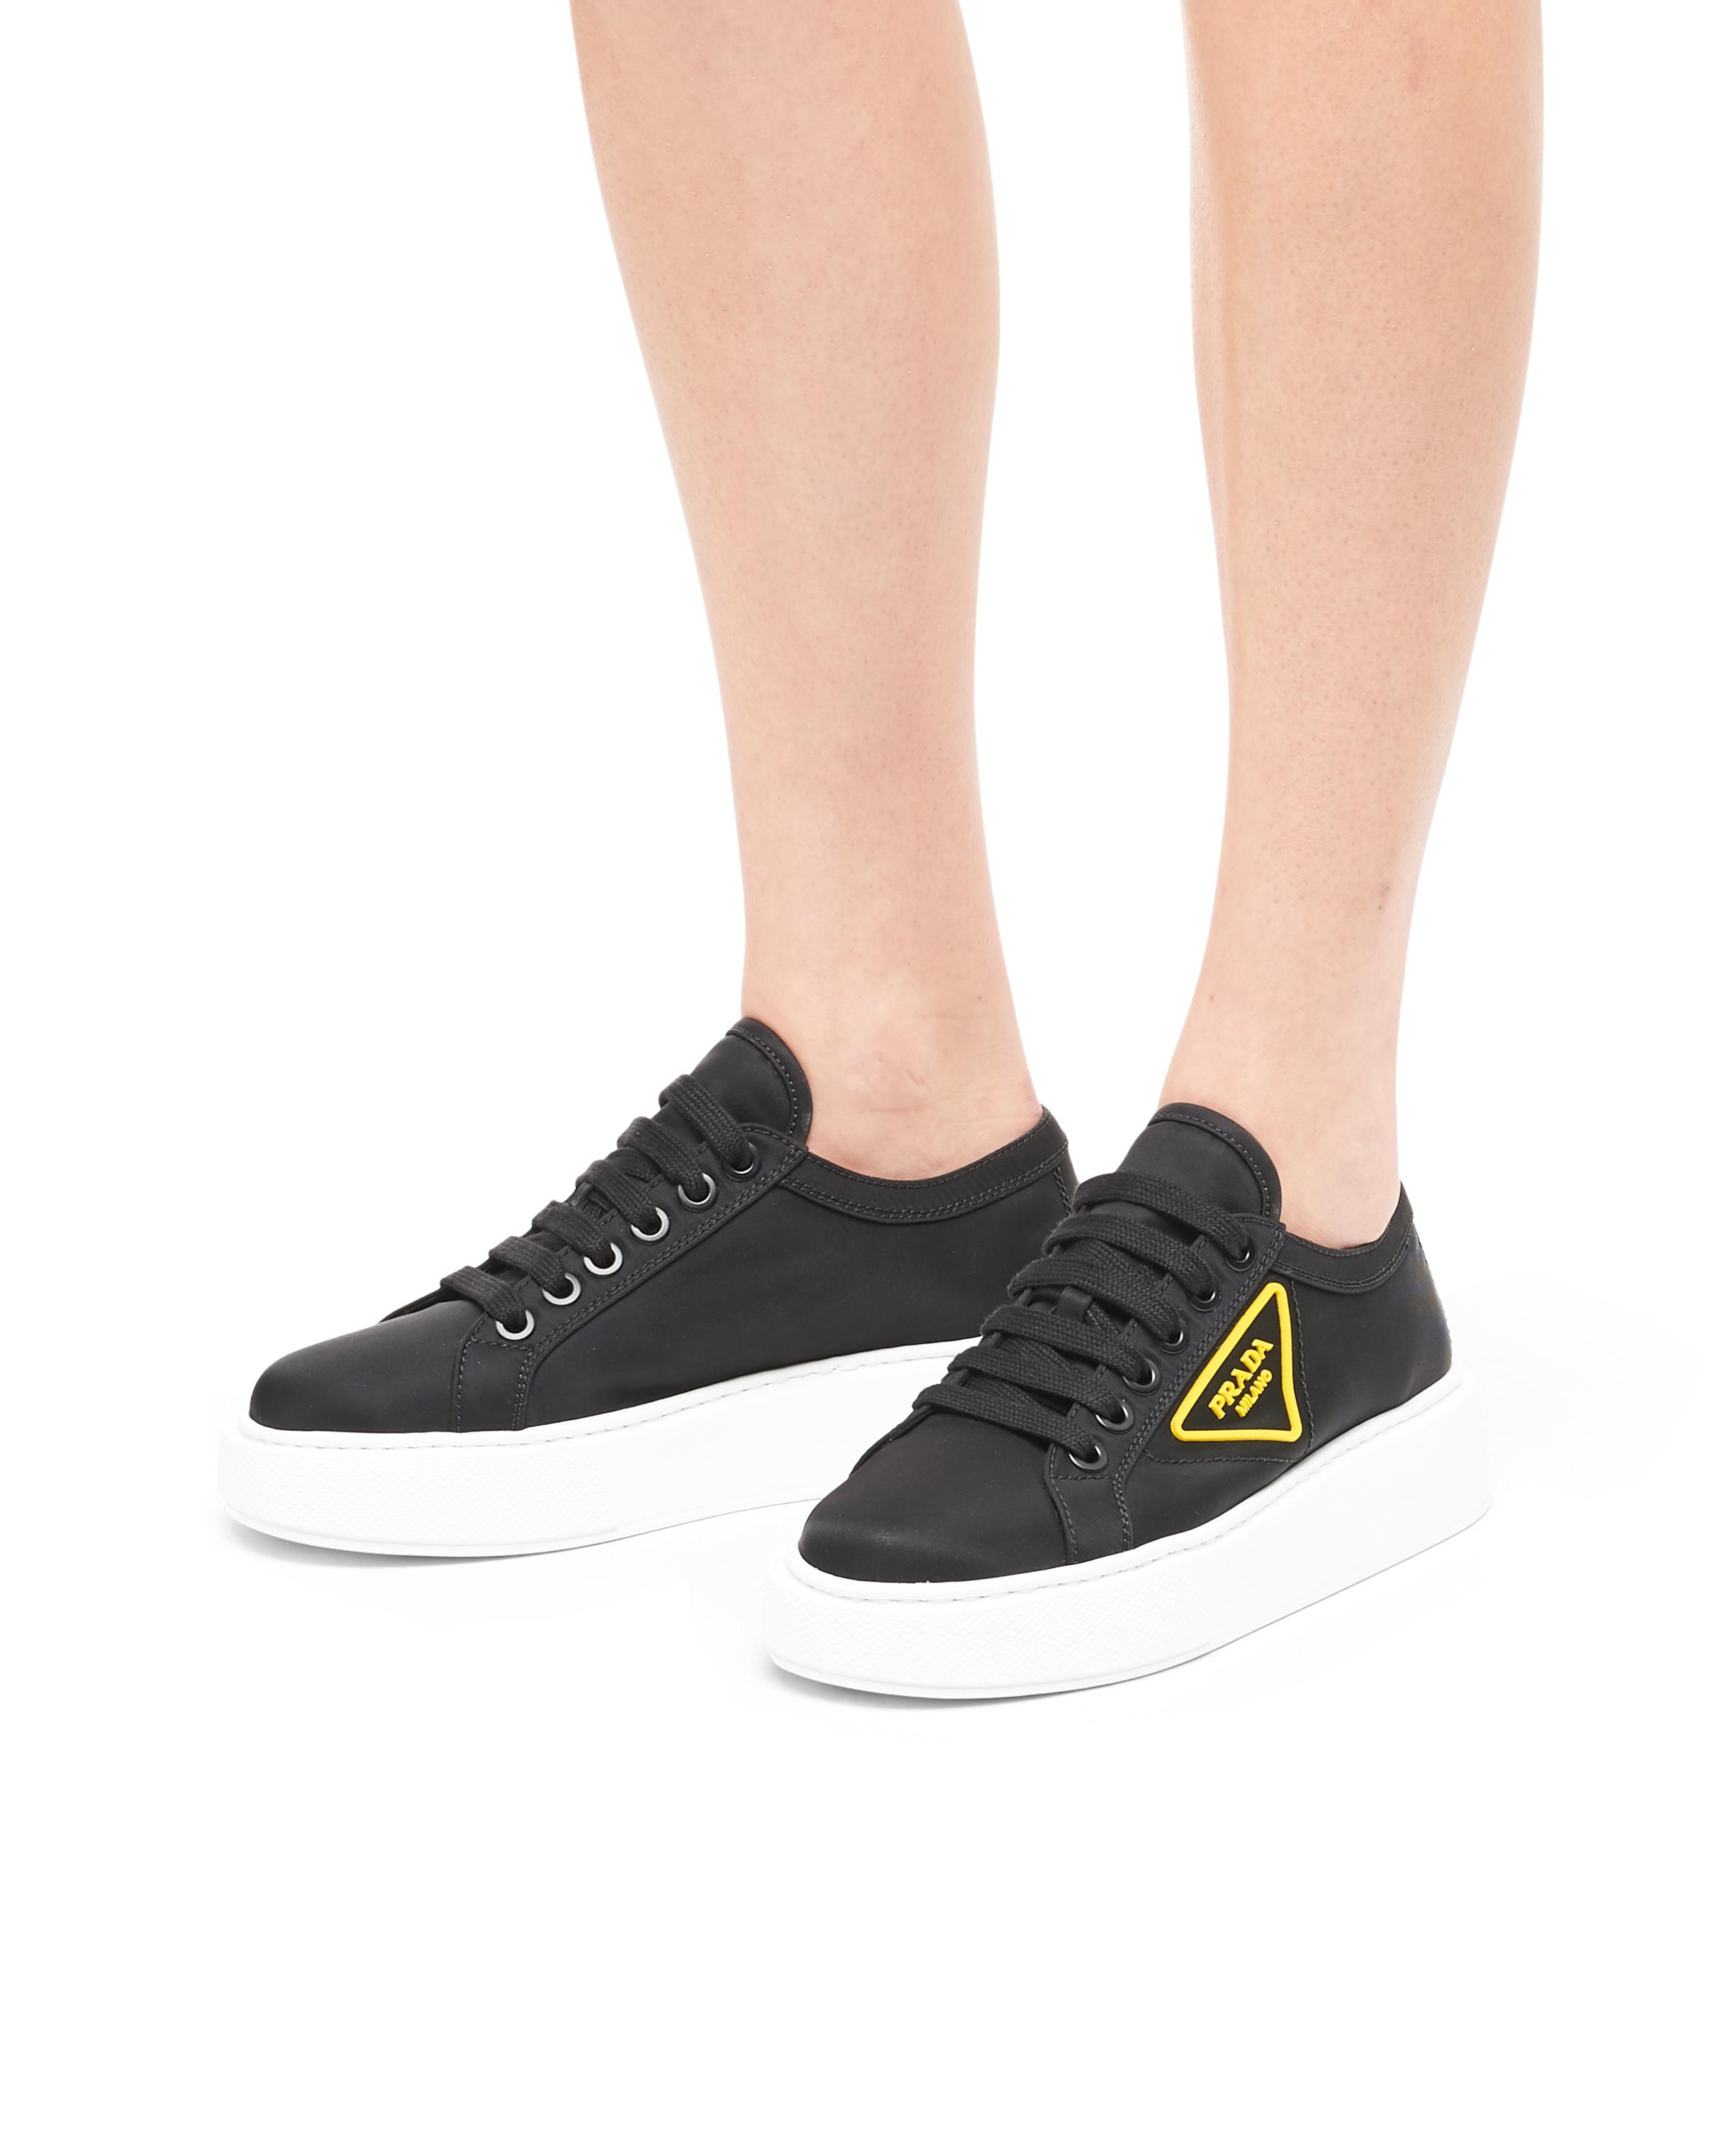 Prada Synthetic Nylon Gabardine Sneakers in Black/Yellow (Black 